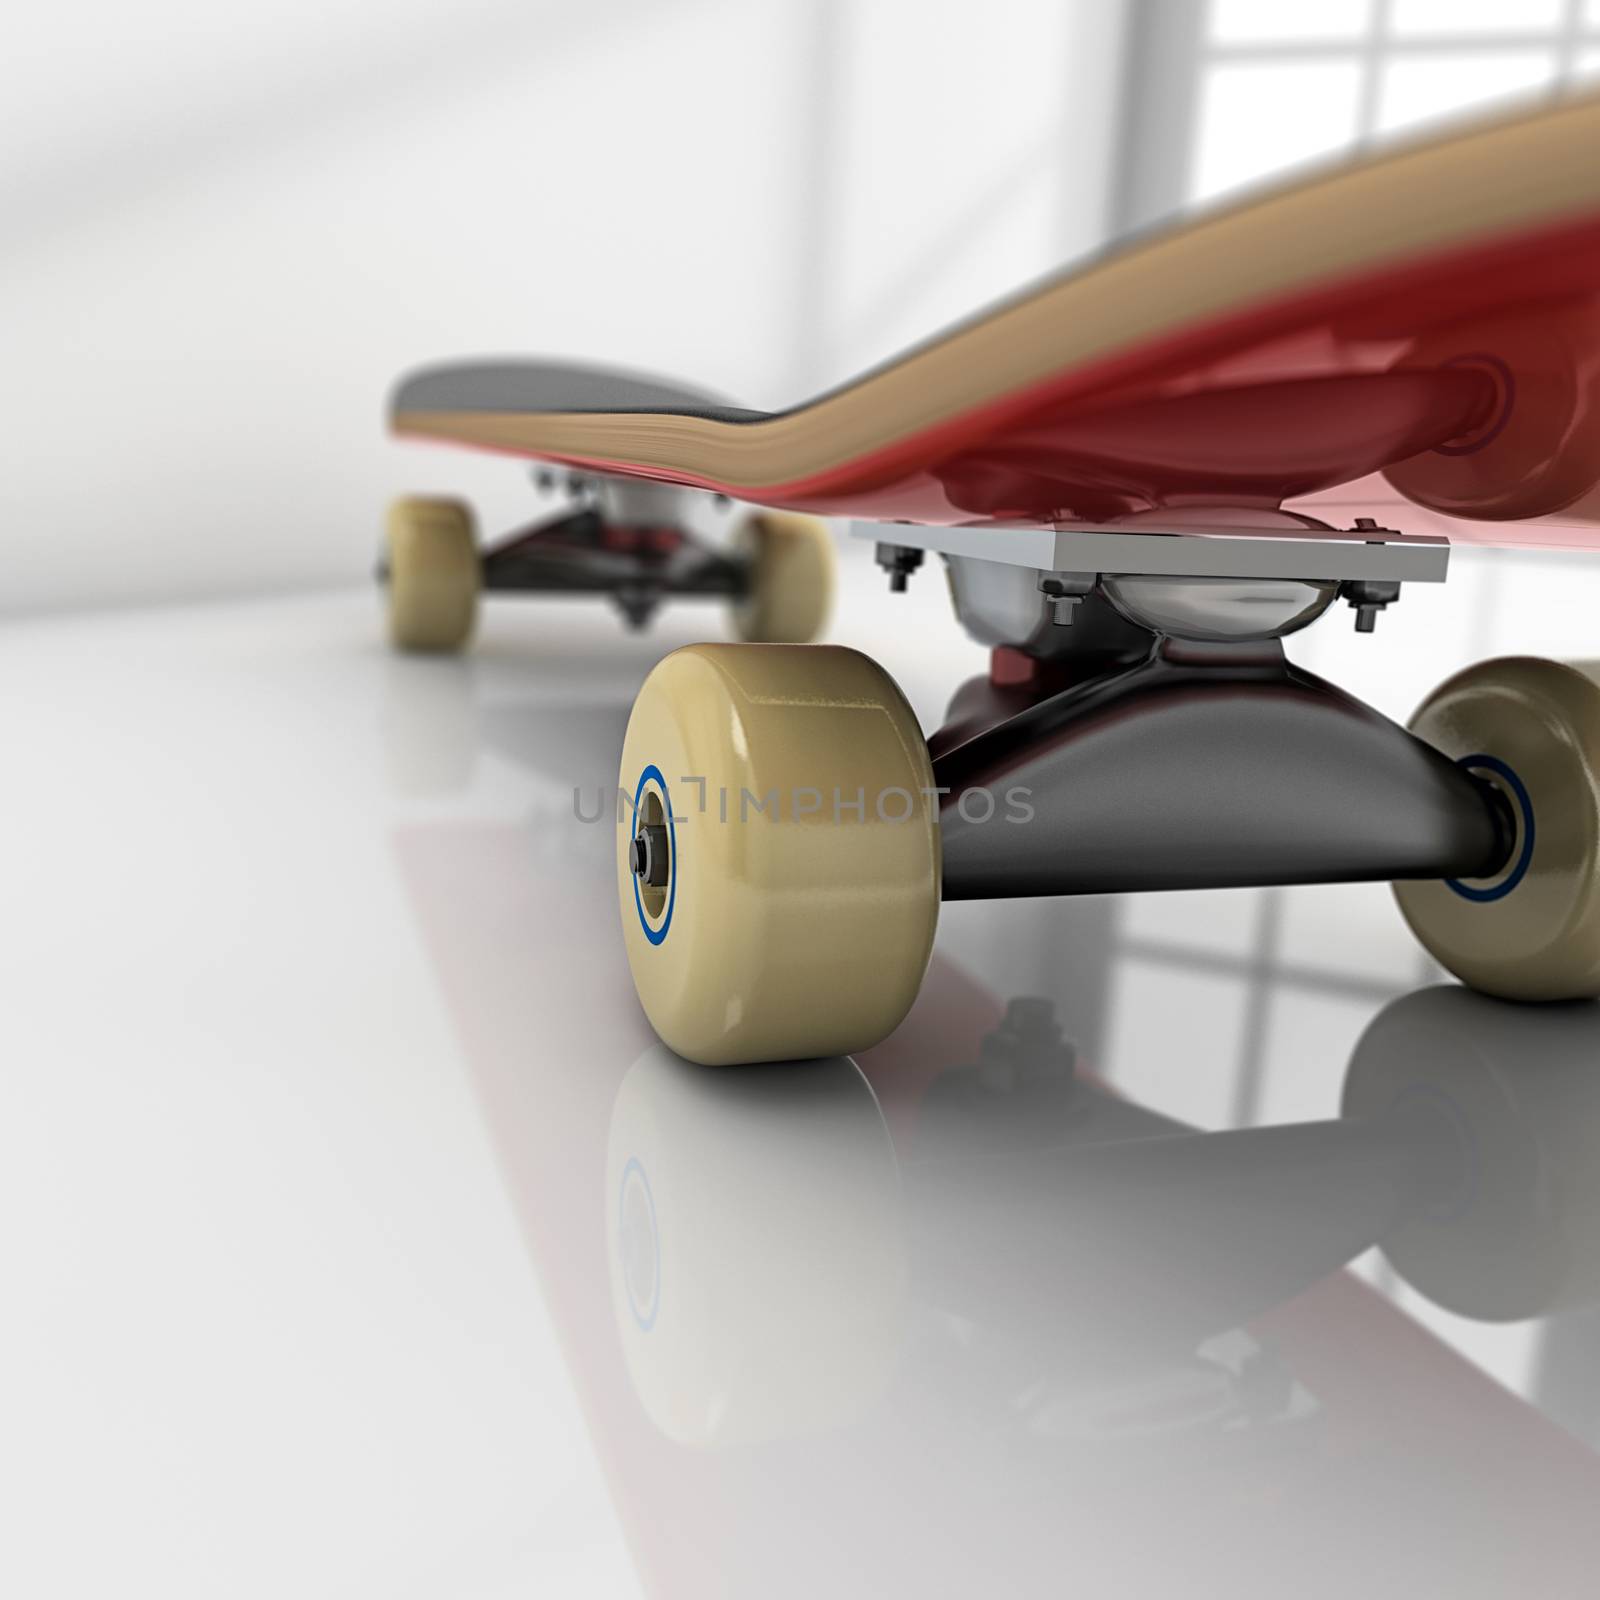 Skateboard on room by dynamicfoto